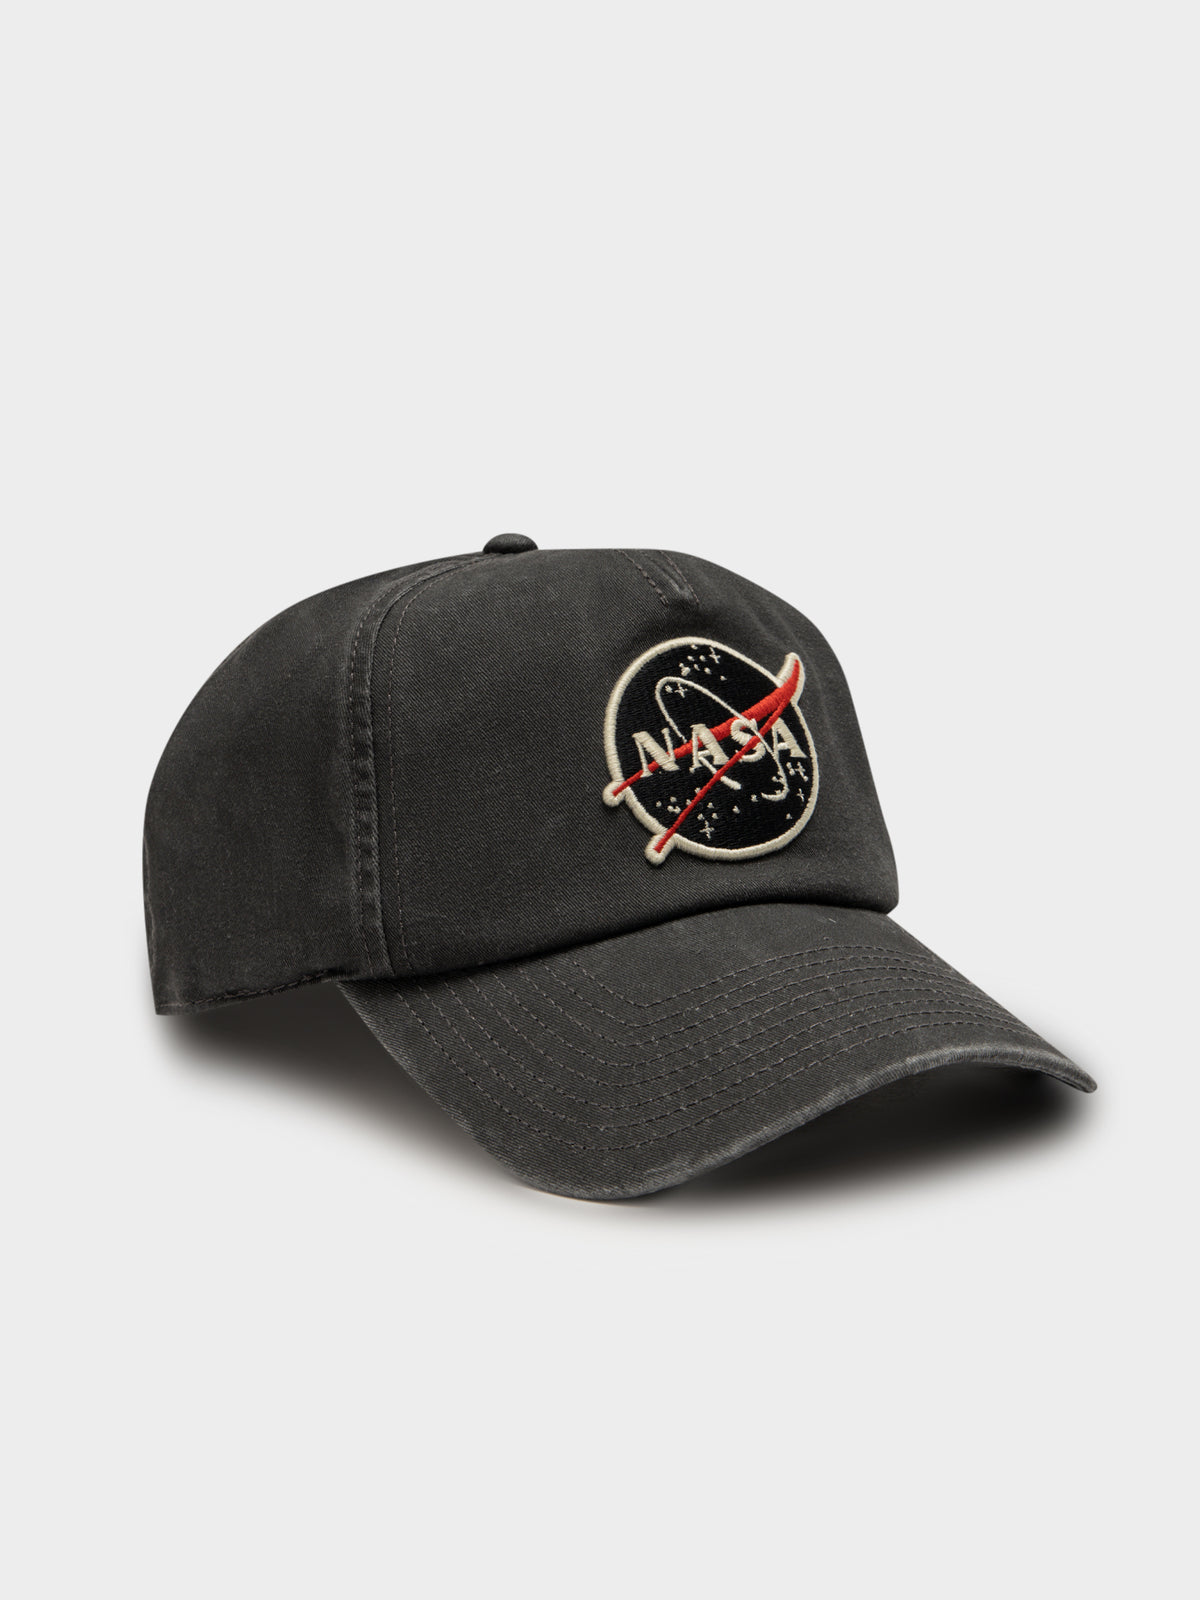 NASA Space Surplus Cap in Black